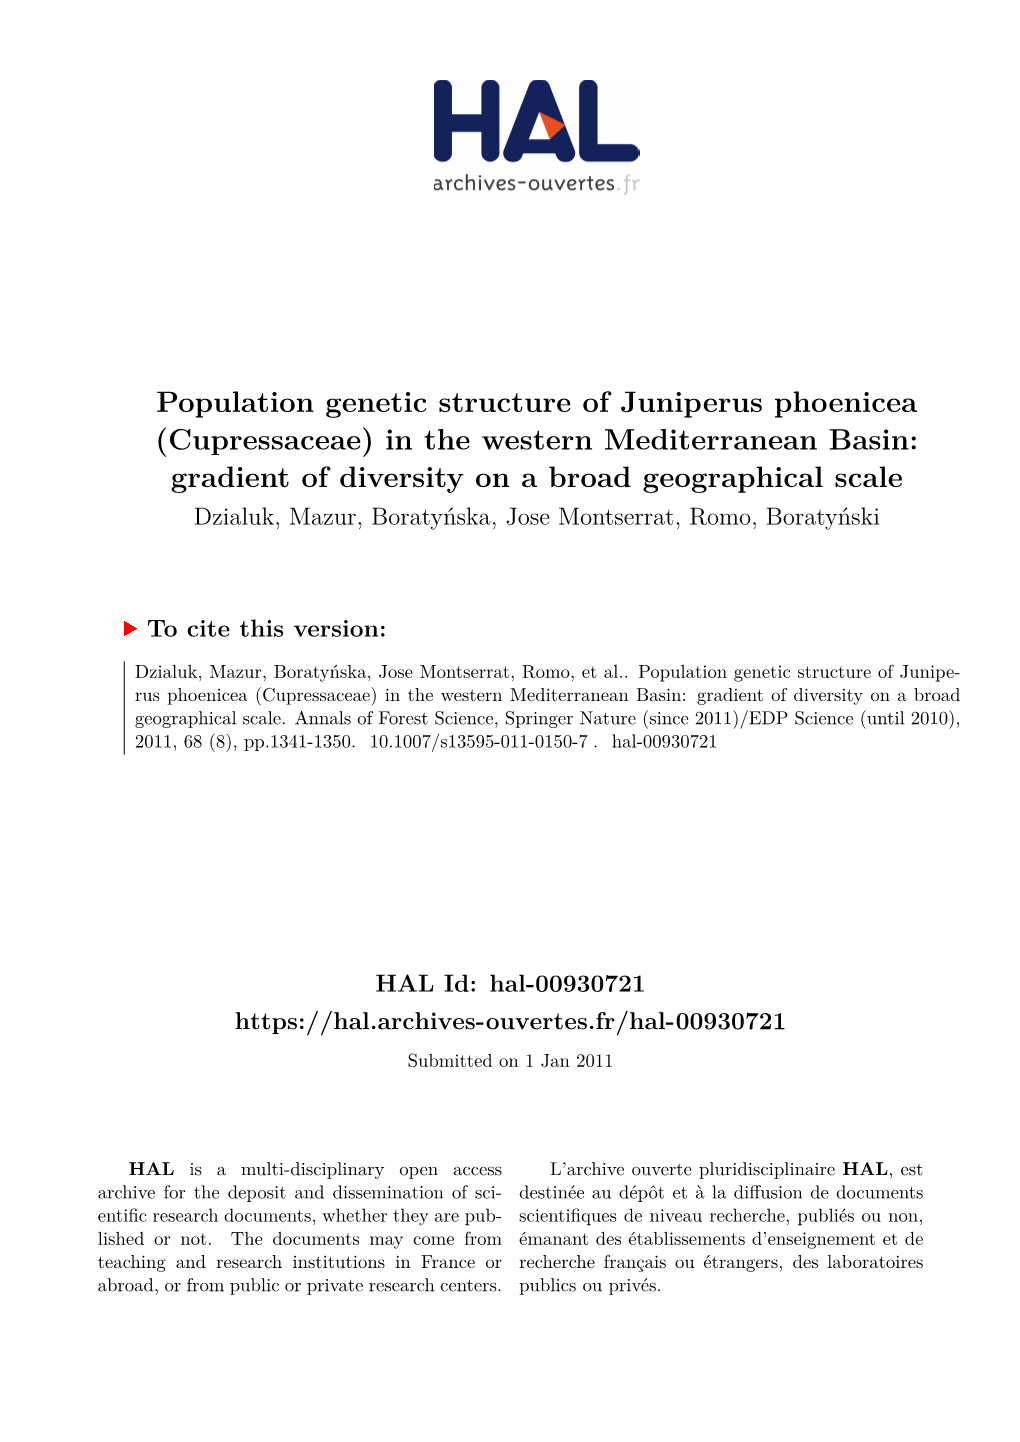 Population Genetic Structure of Juniperus Phoenicea